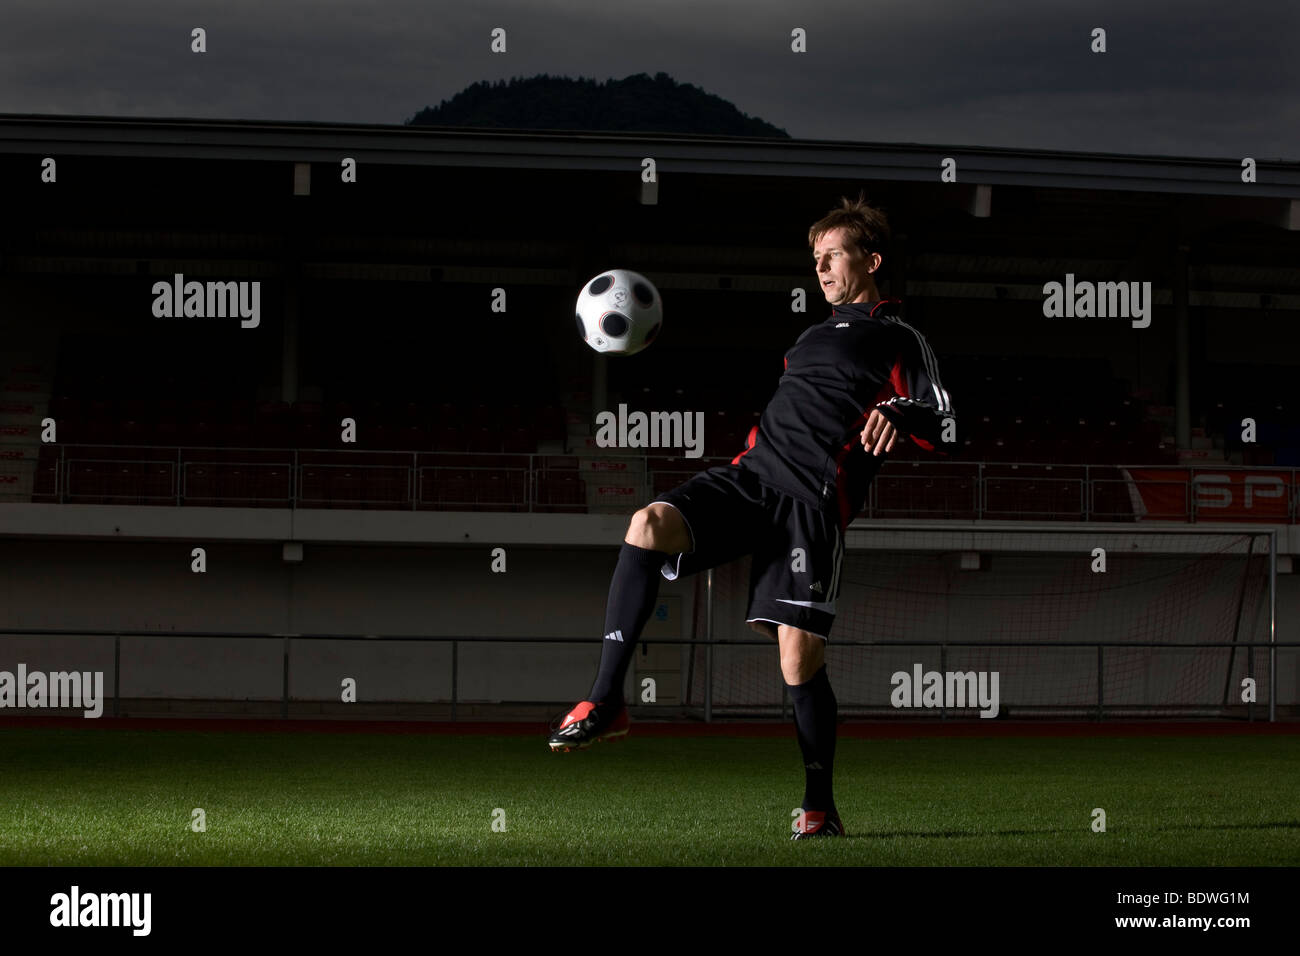 Football player, North Tyrol, Tyrol, Austria, Europe Stock Photo